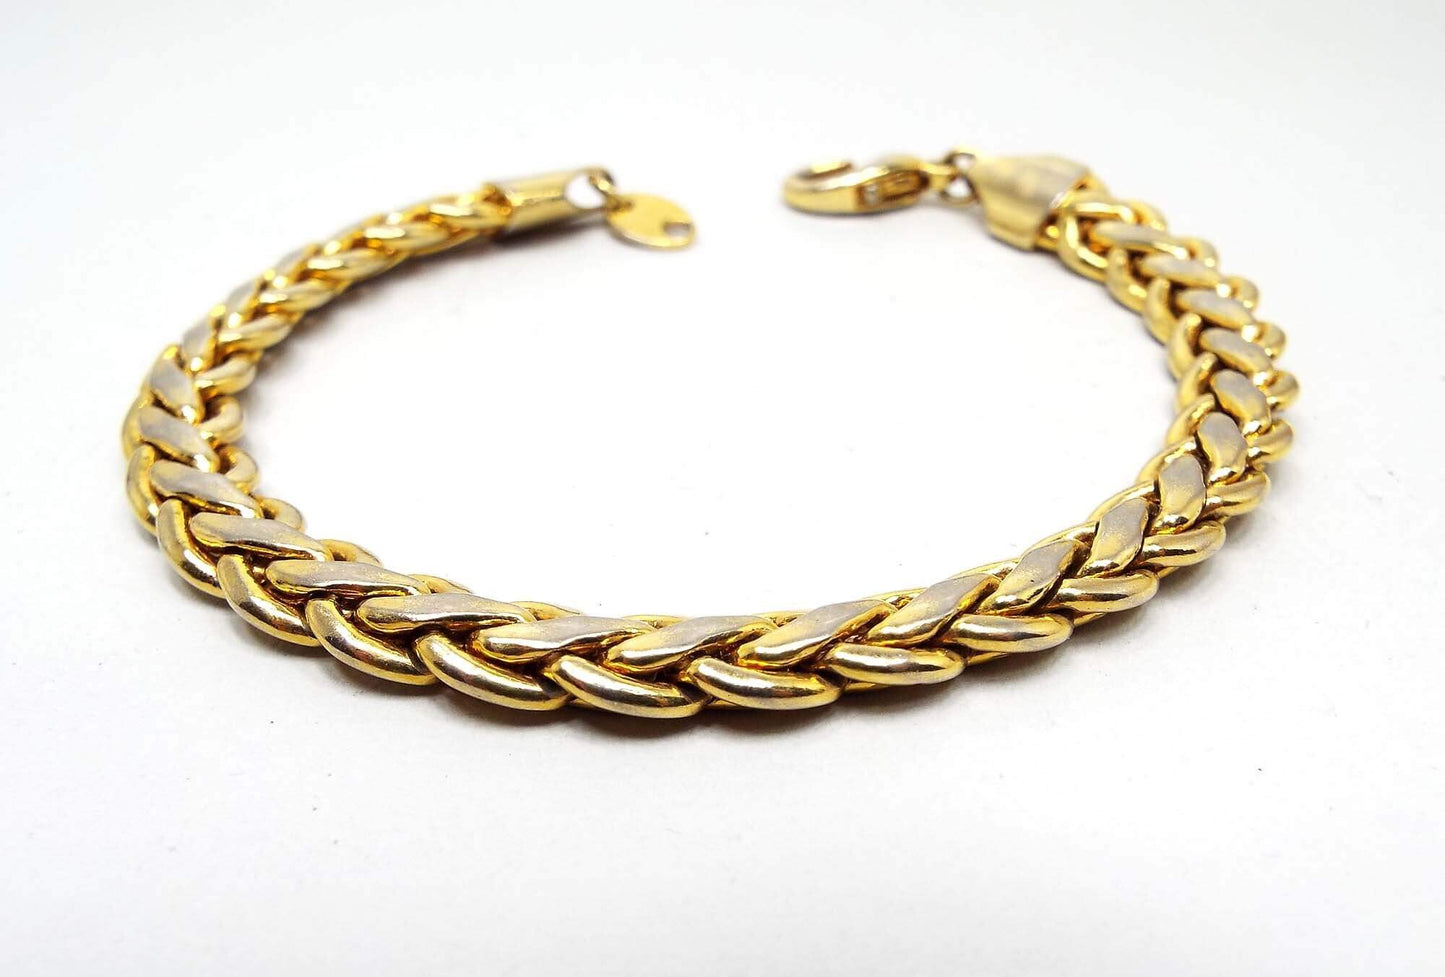 Woven Braided Link Vintage Chain Bracelet